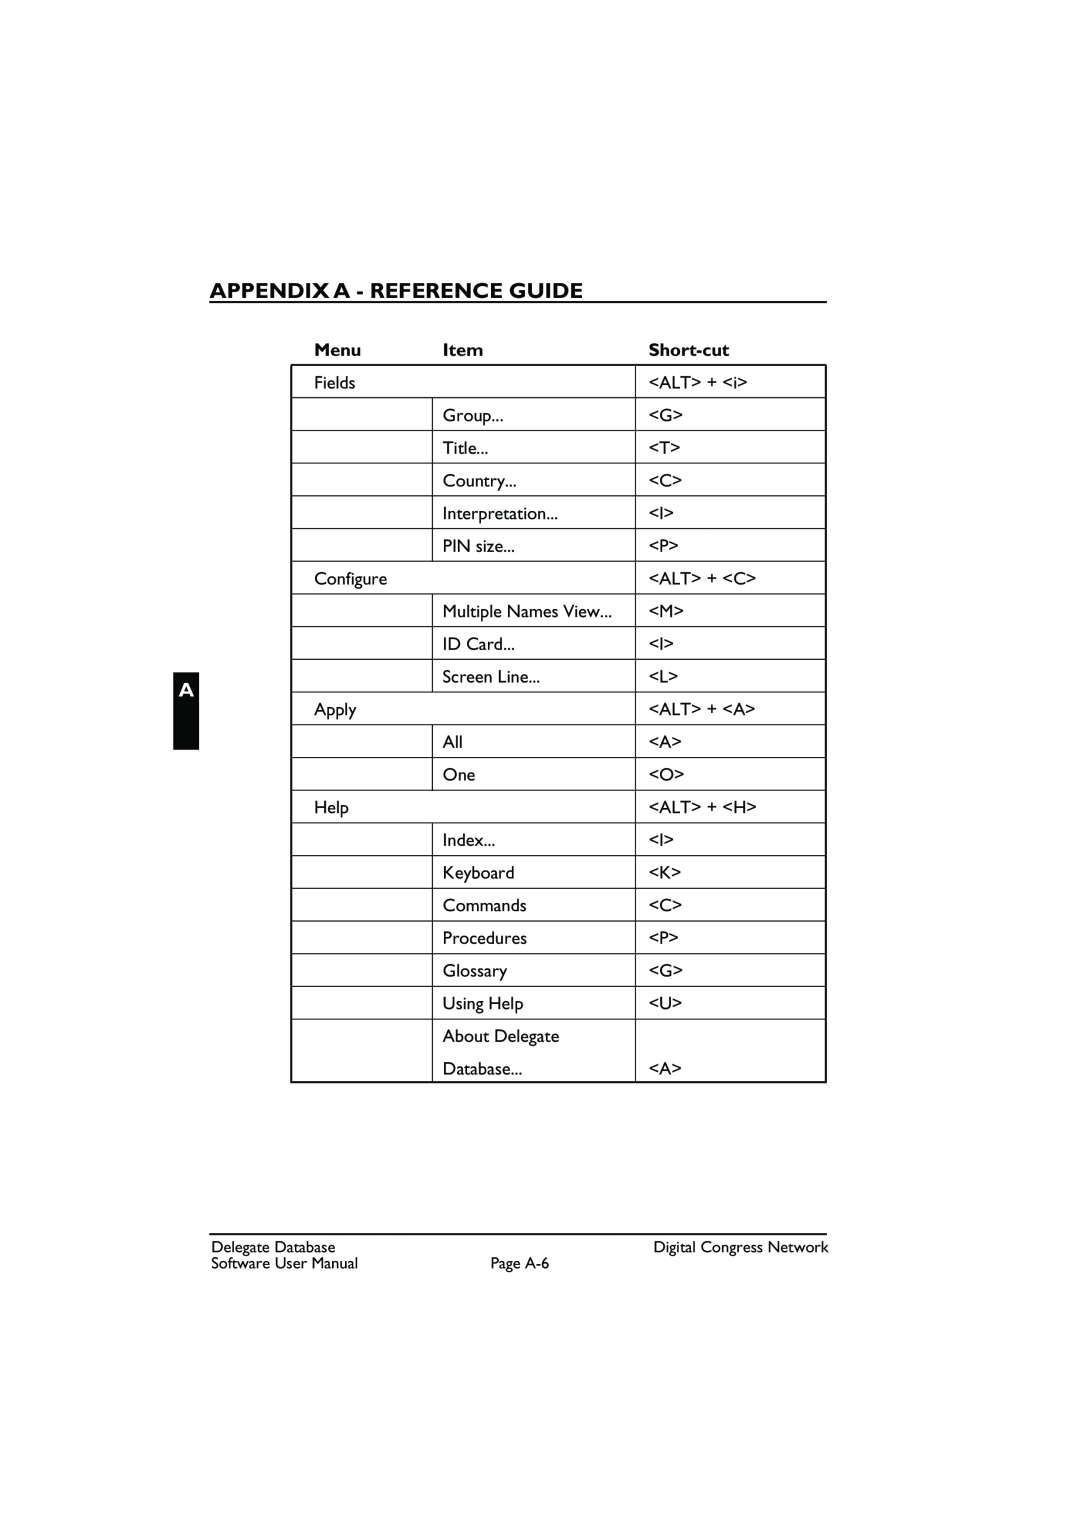 Bosch Appliances LBB3580 user manual Appendix A - Reference Guide, Menu, Short-cut, Fields 